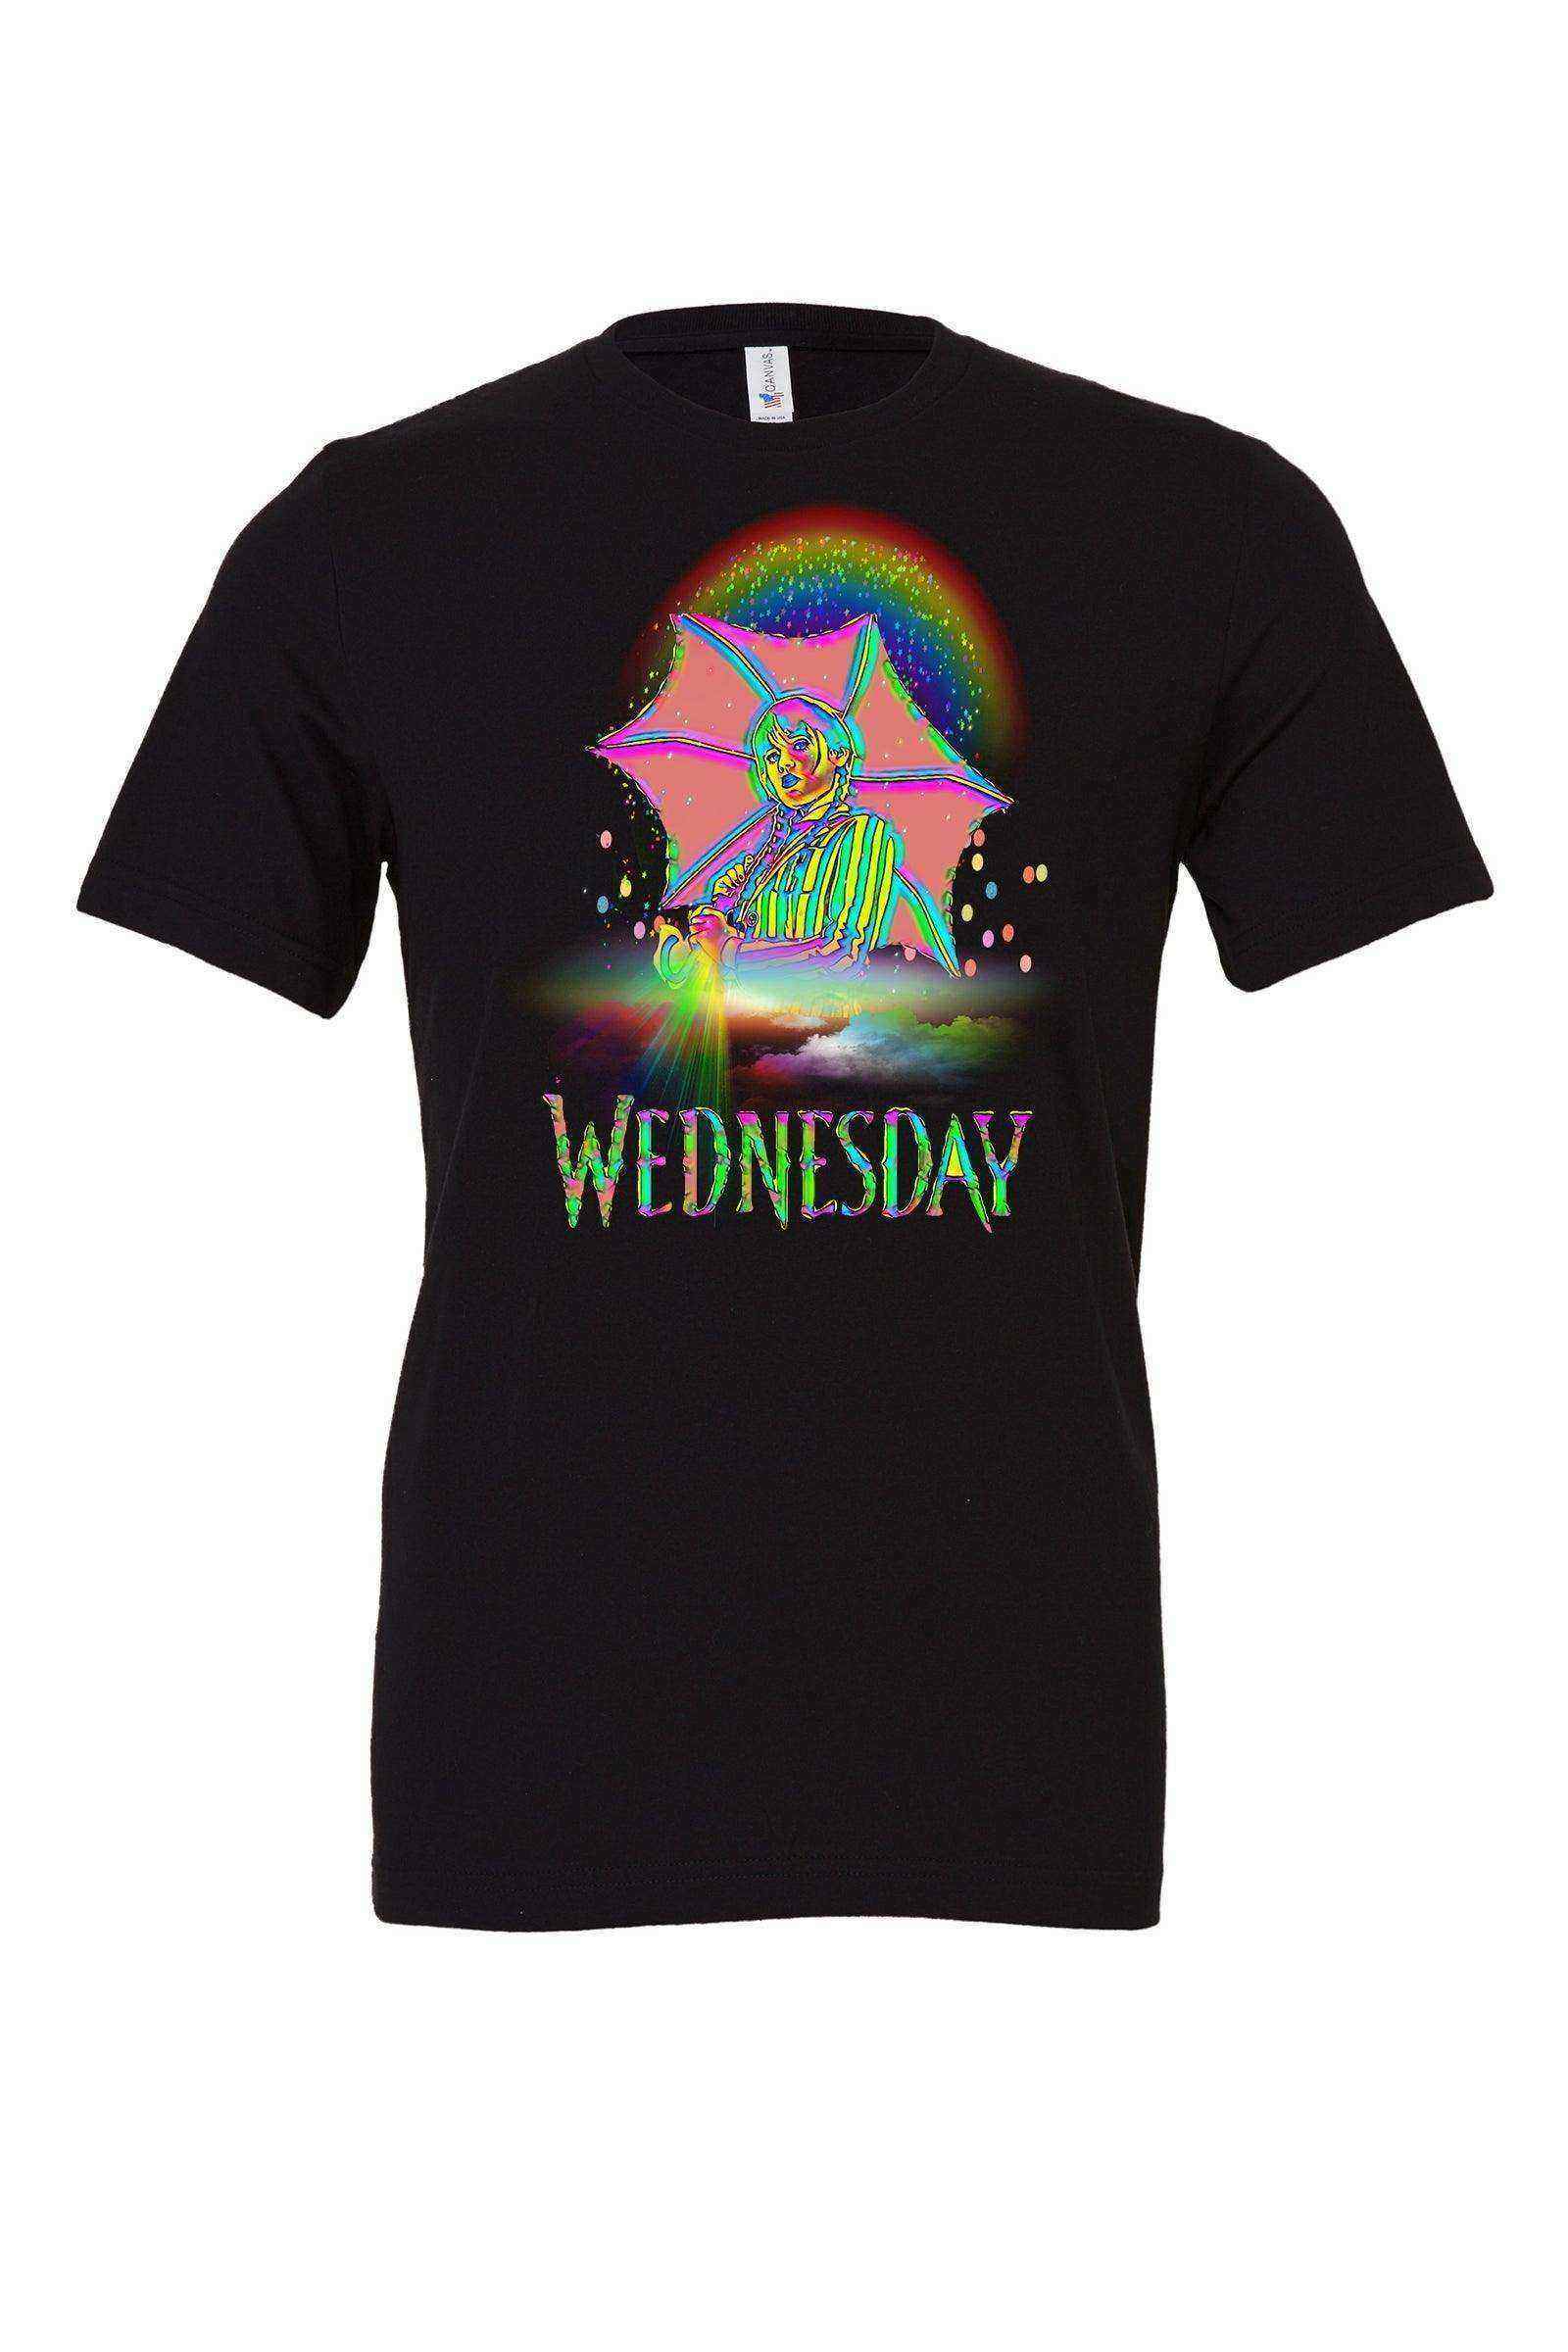 Womens | Bright Wednesday Shirt | Umbrella Girl Shirt | The Addams Shirt - Dylan's Tees